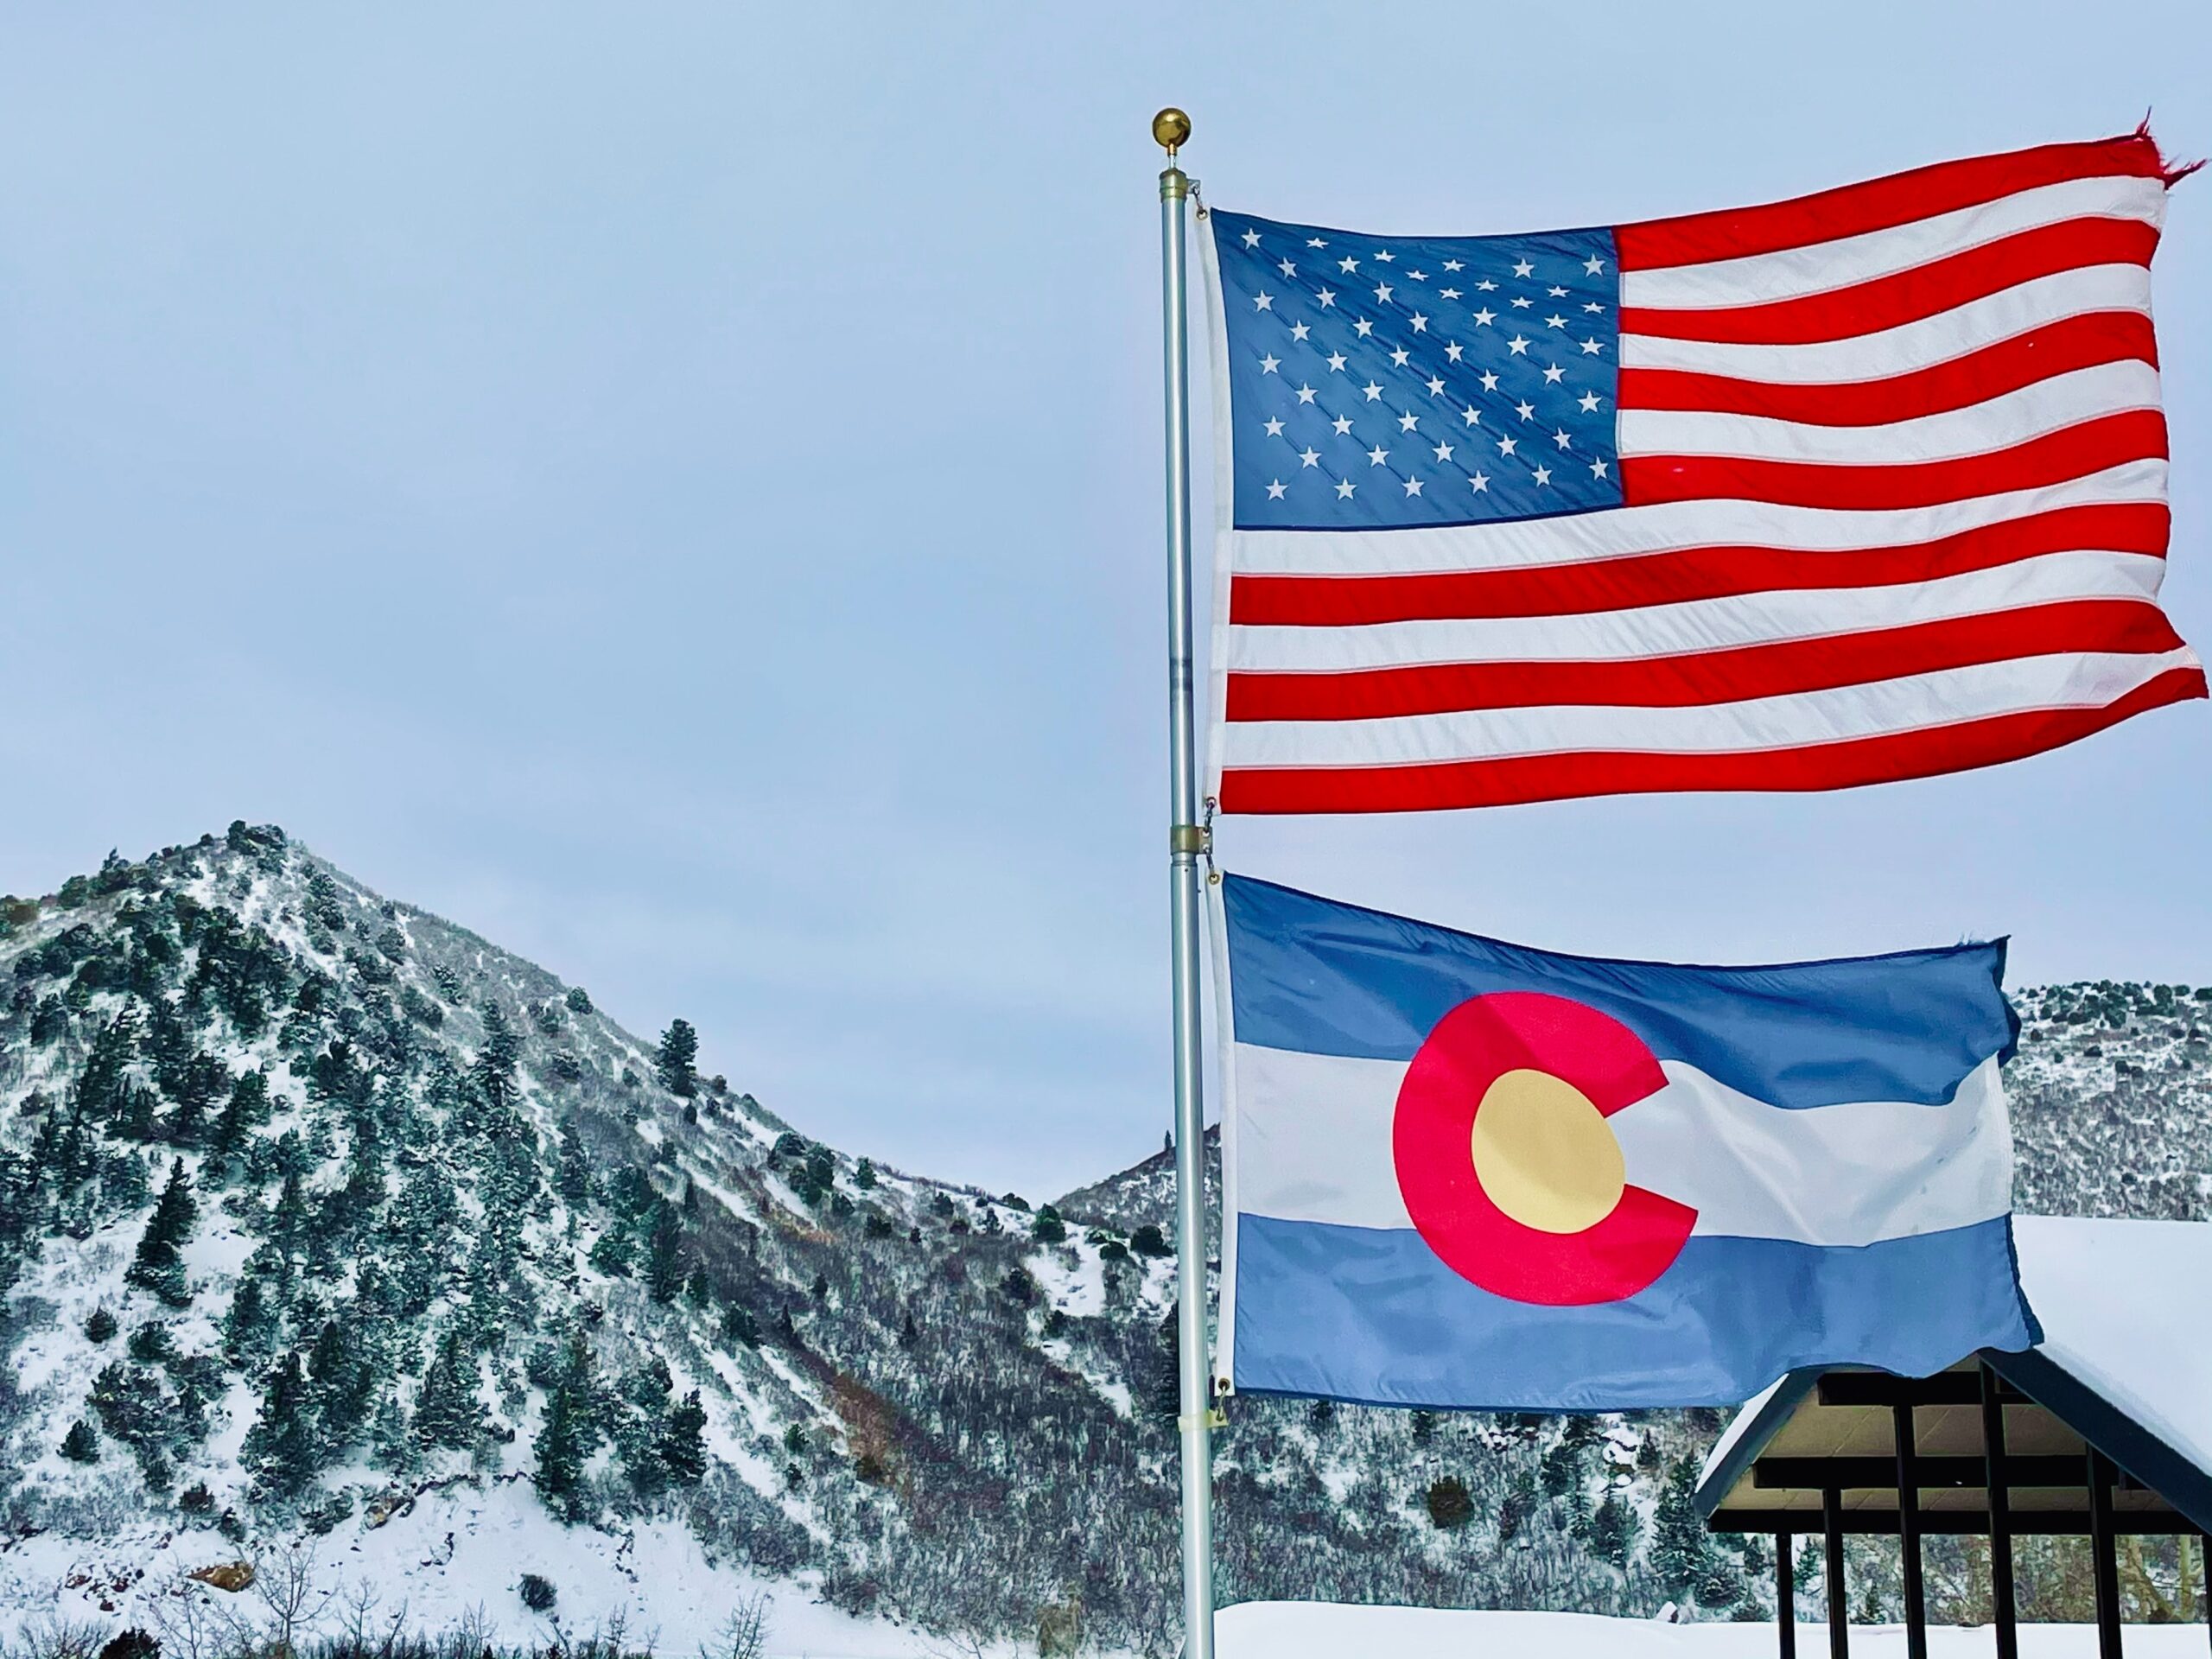 Aspen Colorado Psychedelics decriminalization vote flag stock image